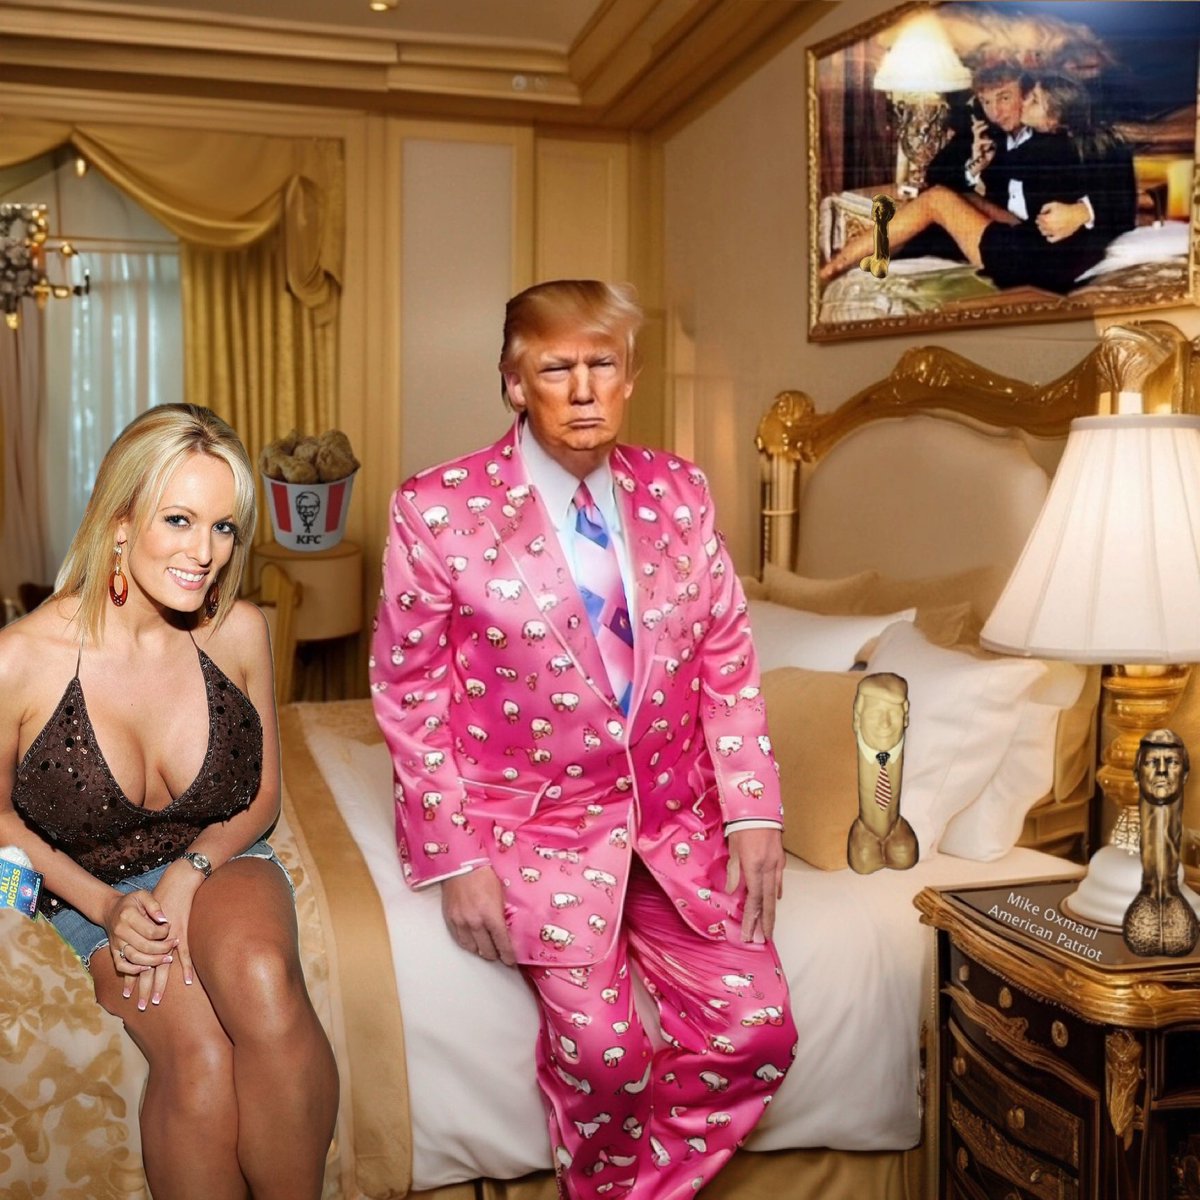 Stormy Daniels says Donald J. Trump was wearing 'satin pajamas' when they met at hotel suite. Here’s the allege photo of when they met. #Pajamas #Stormy #StormyDaniels #IvankaTrump #GagOrder #NewsUpdate #SleepyDon #Woke #CantBuyMeLove #KarenMcDougal #JudgeMerchan #HushMoneyTrial